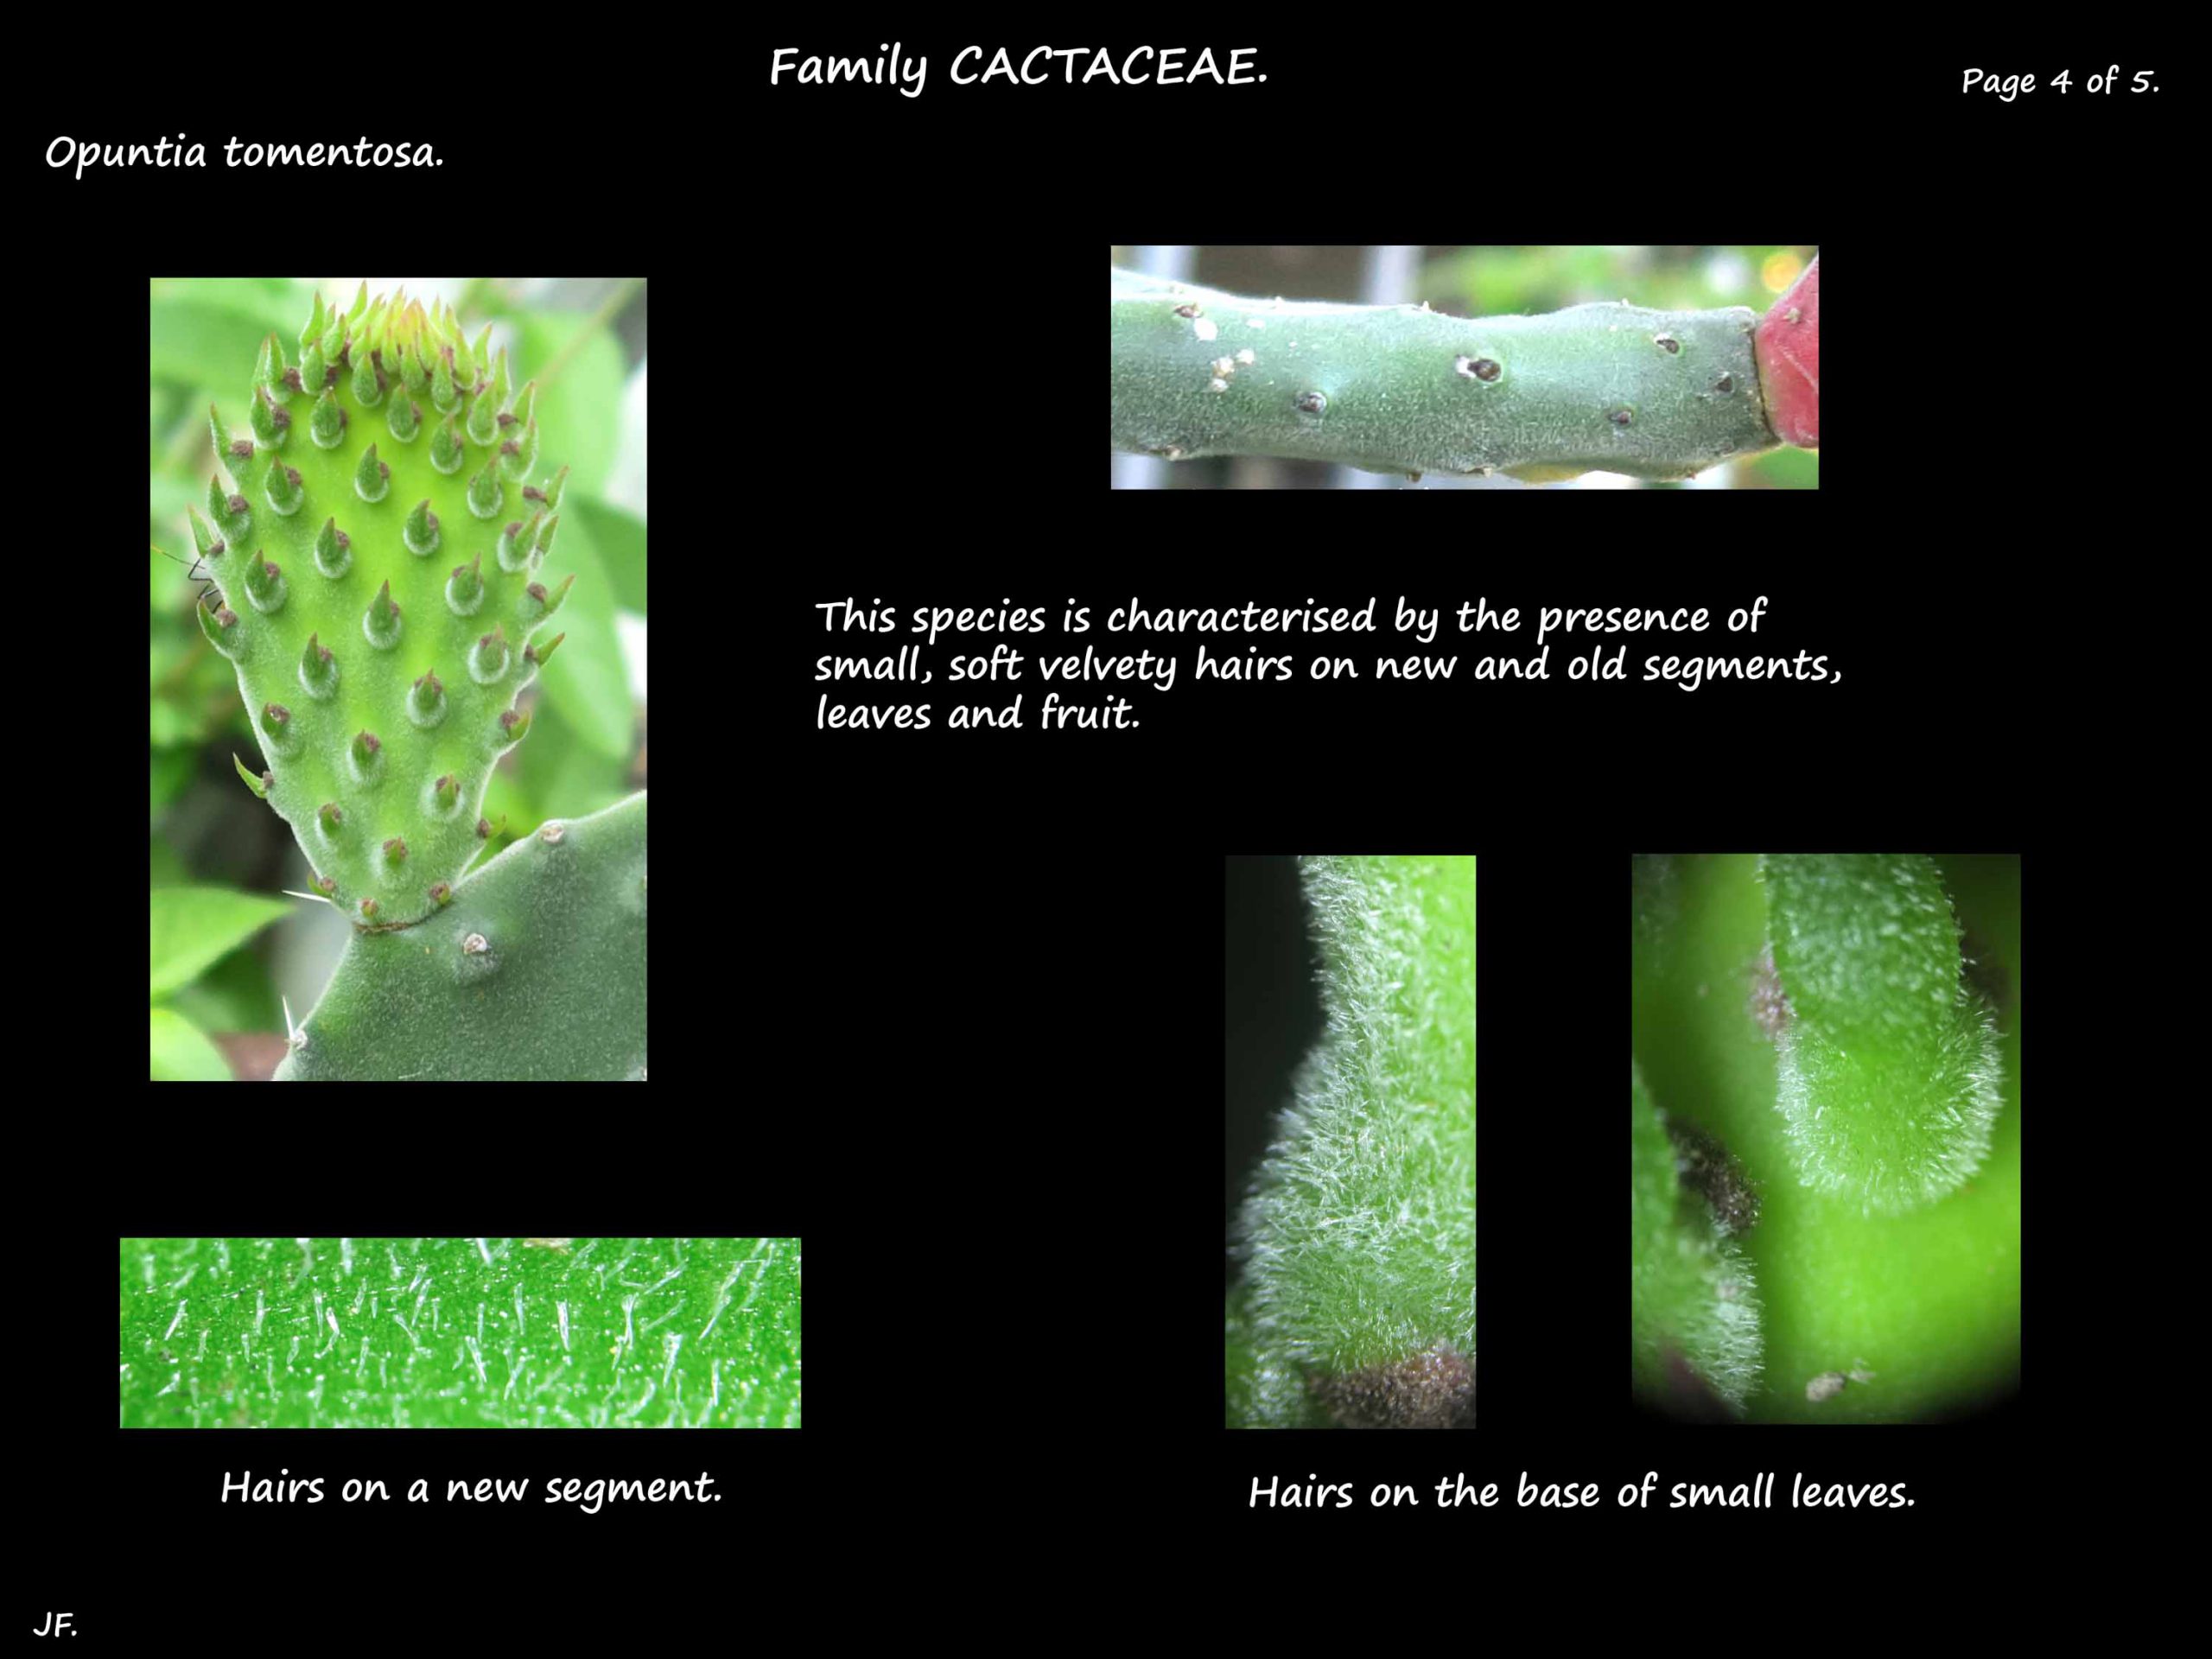 4 Opuntia tomemtosa hairs